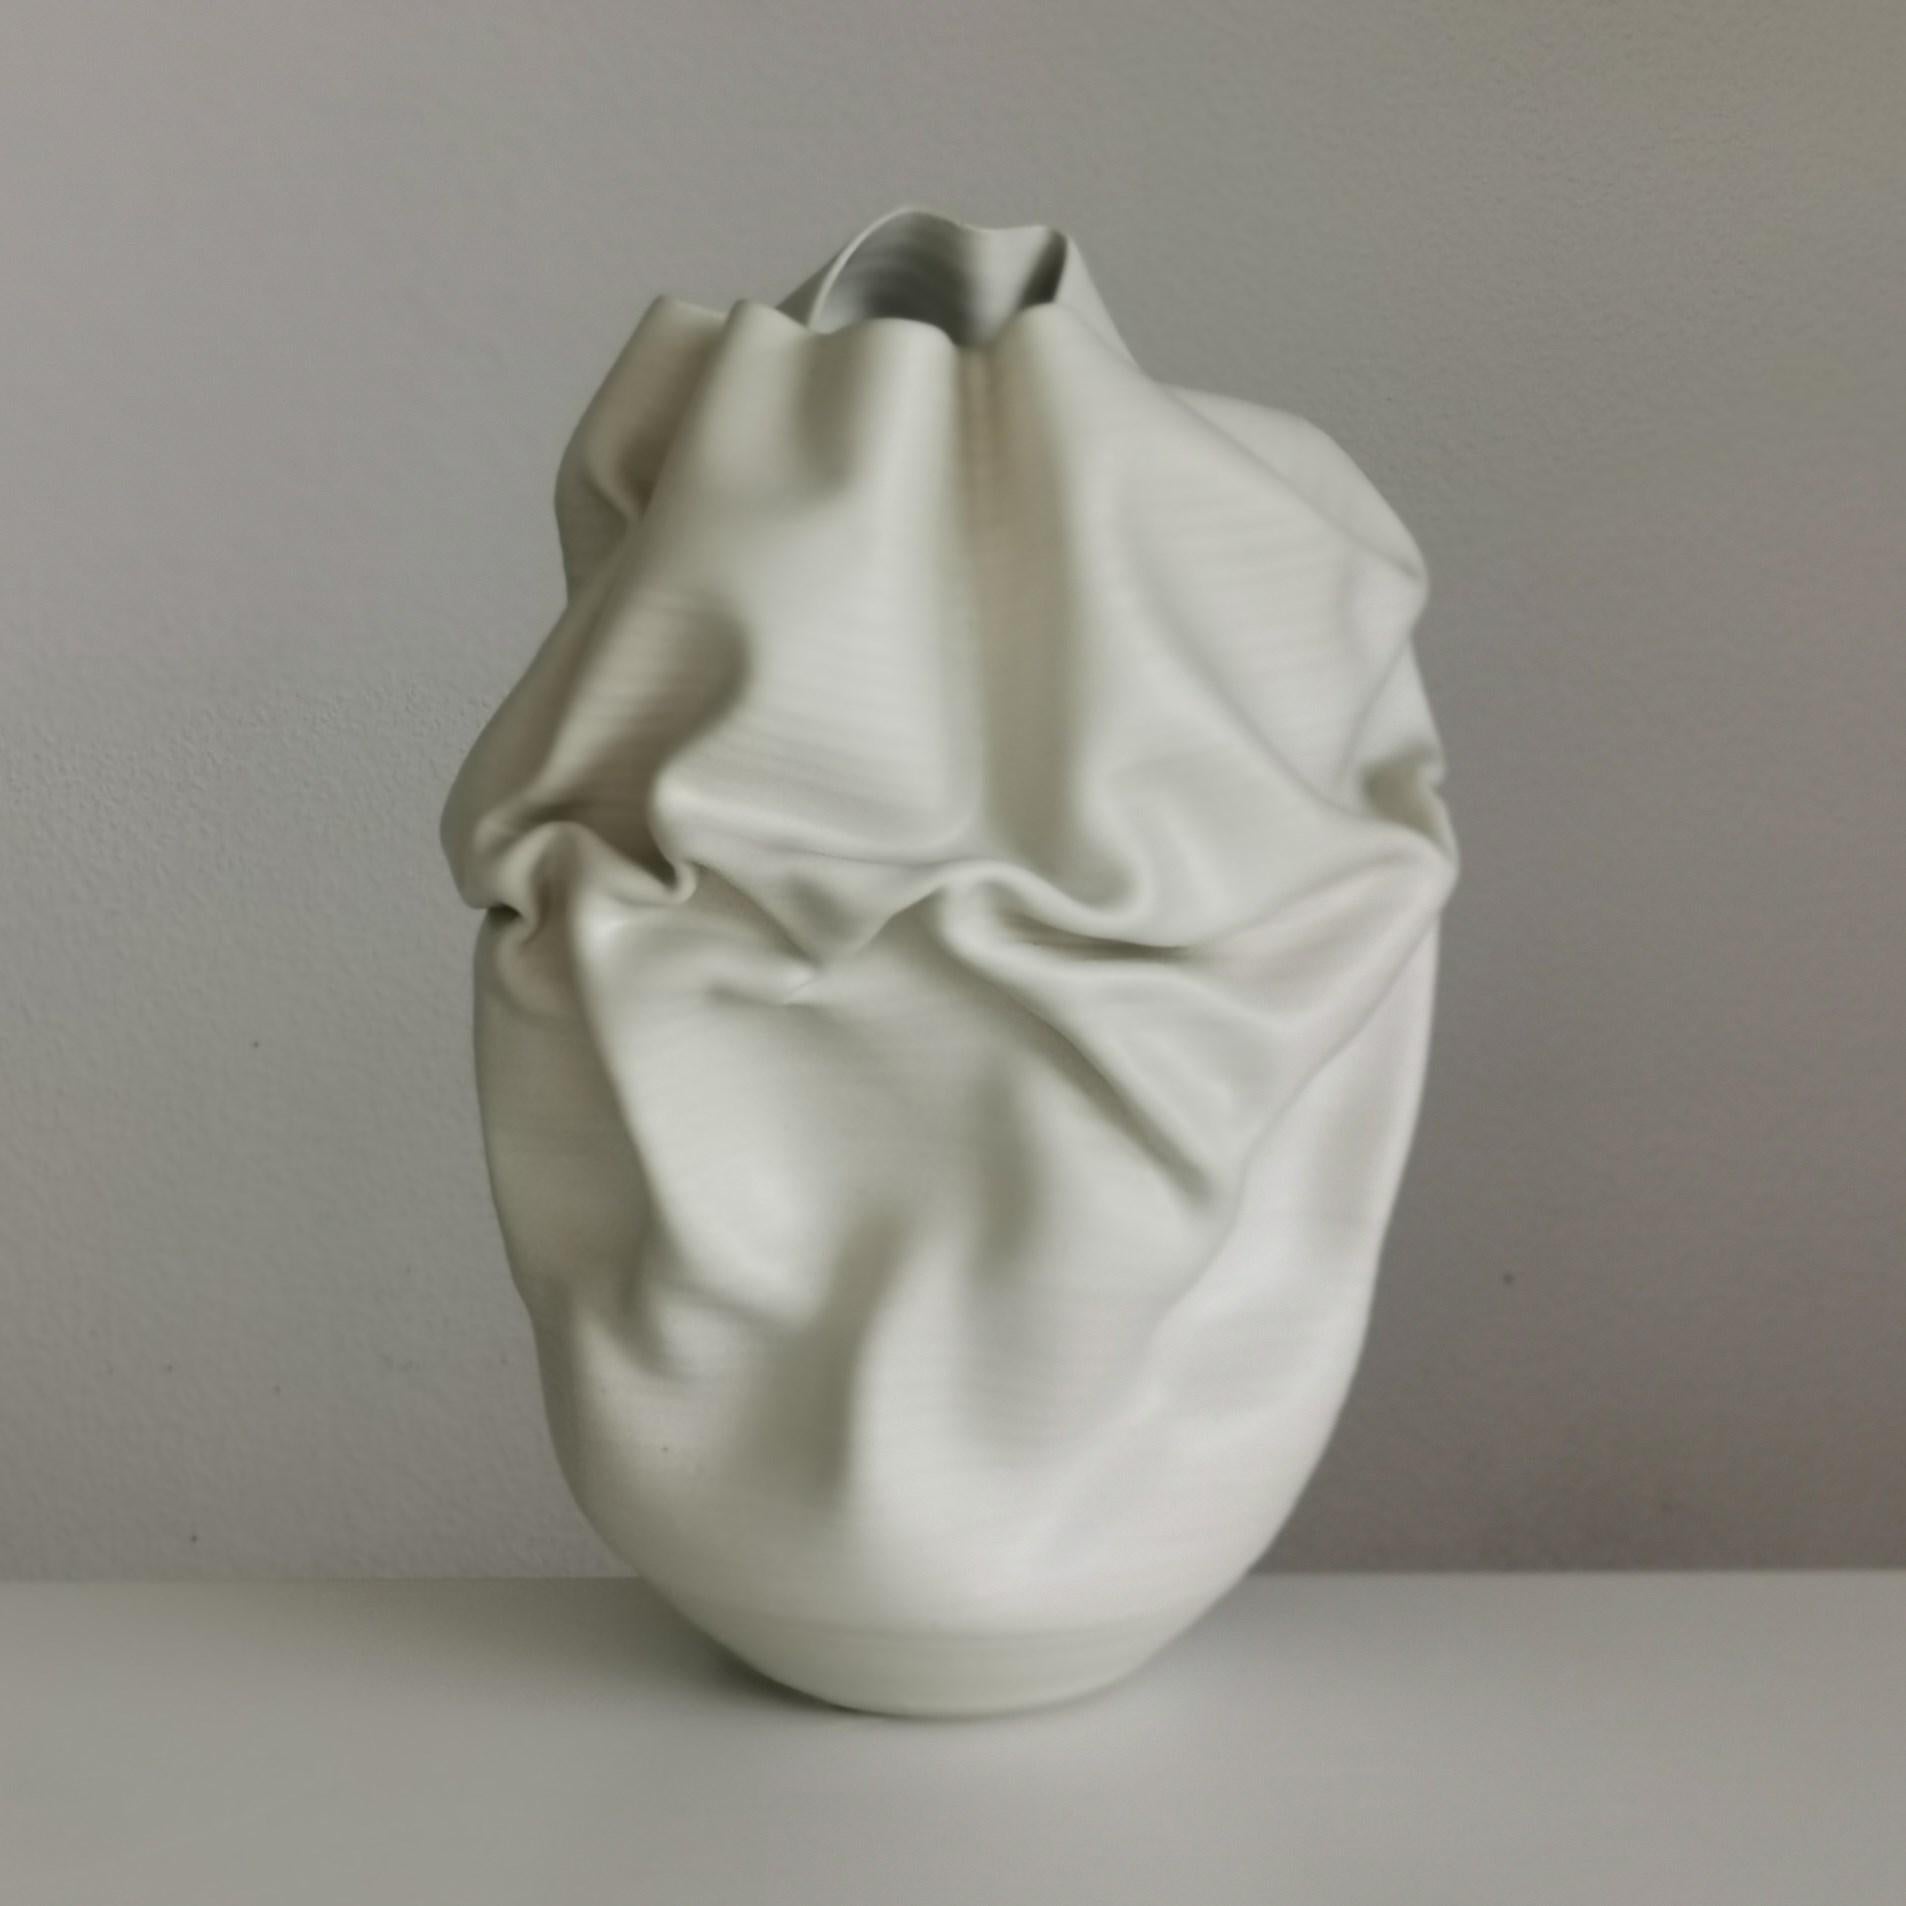 Undulating Crumpled Form No 51, a Ceramic Vessel by Nicholas Arroyave-Portela 8